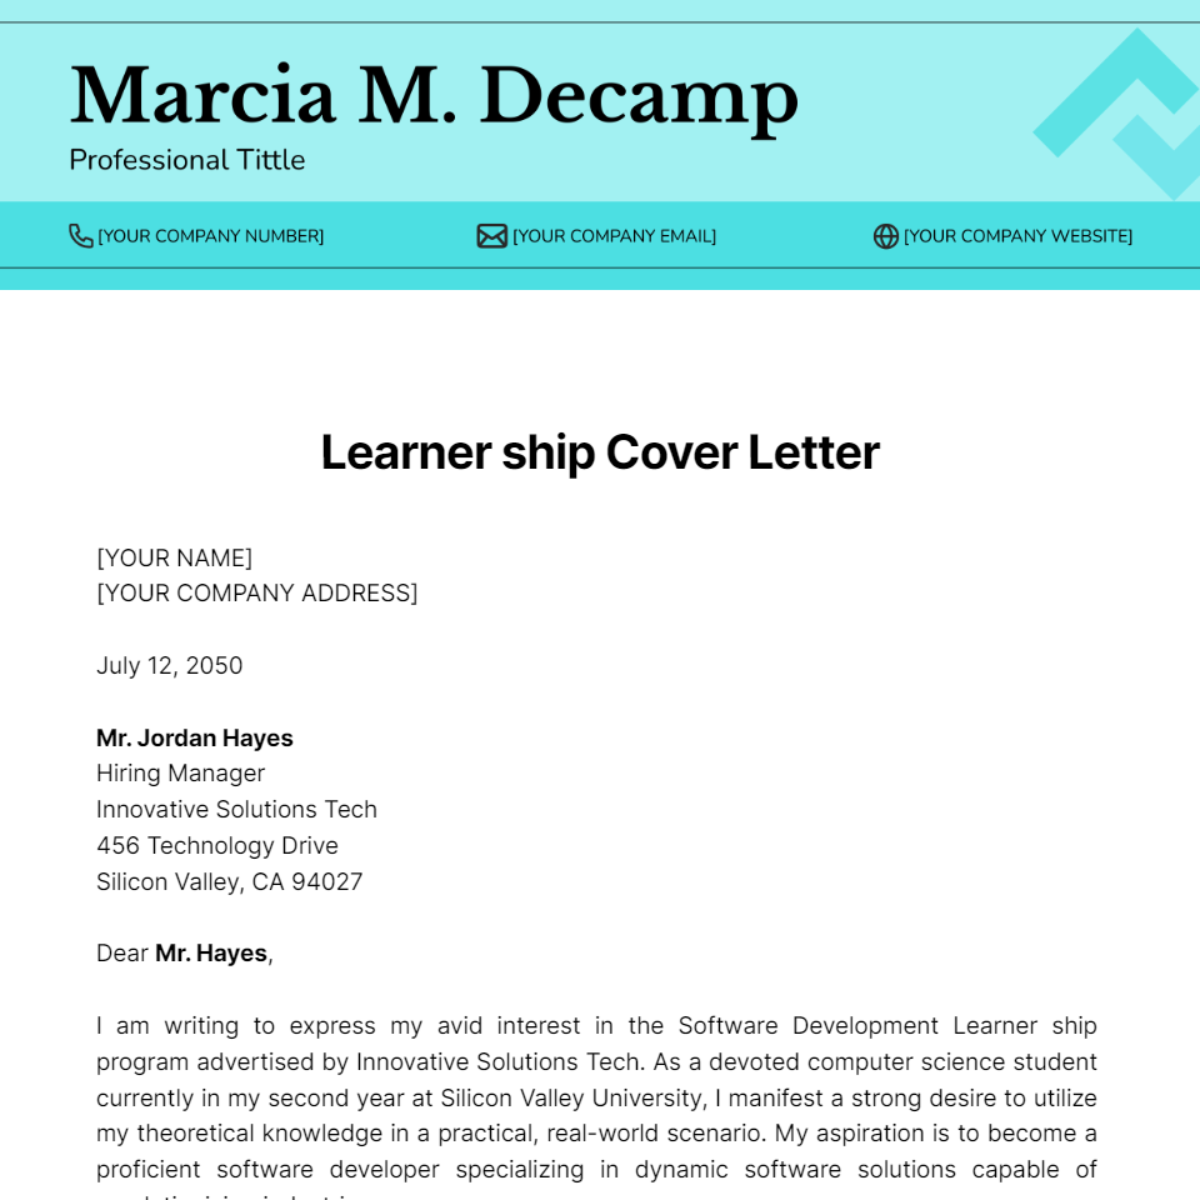 Learner ship Cover Letter Template